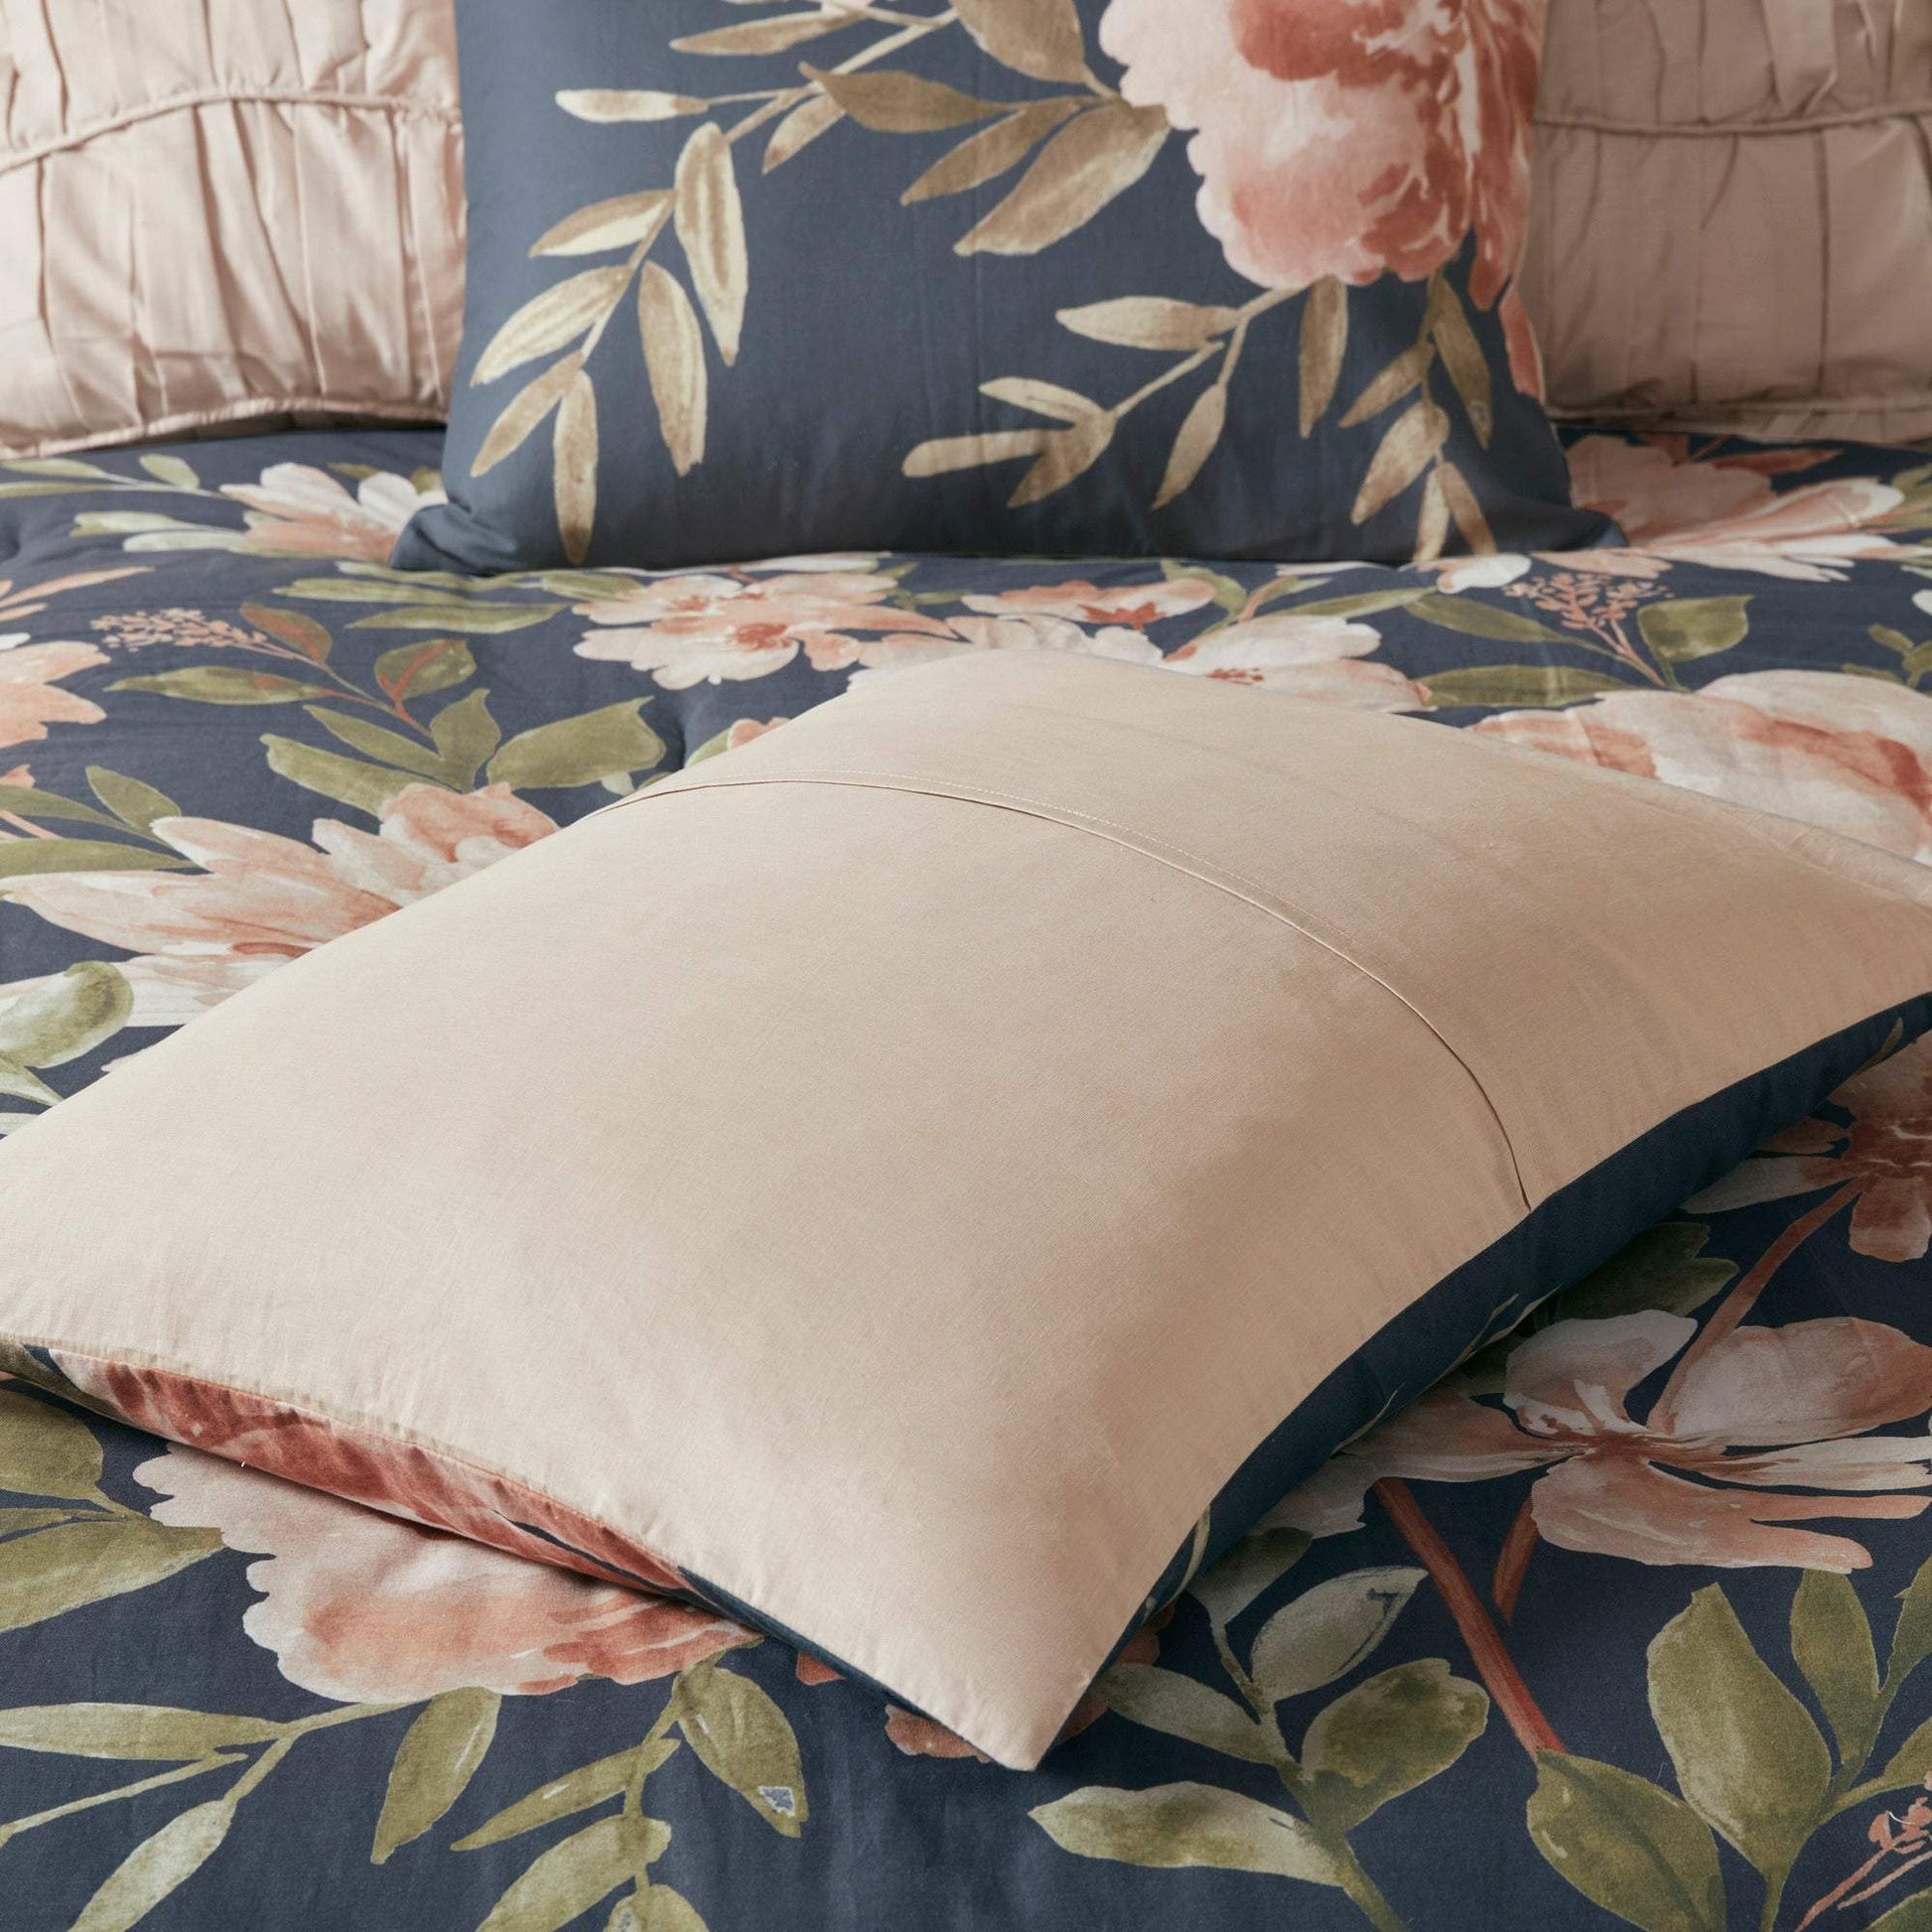 Miami 8-Piece Comforter Set Comforter Sets By Olliix/JLA HOME (E & E Co., Ltd)